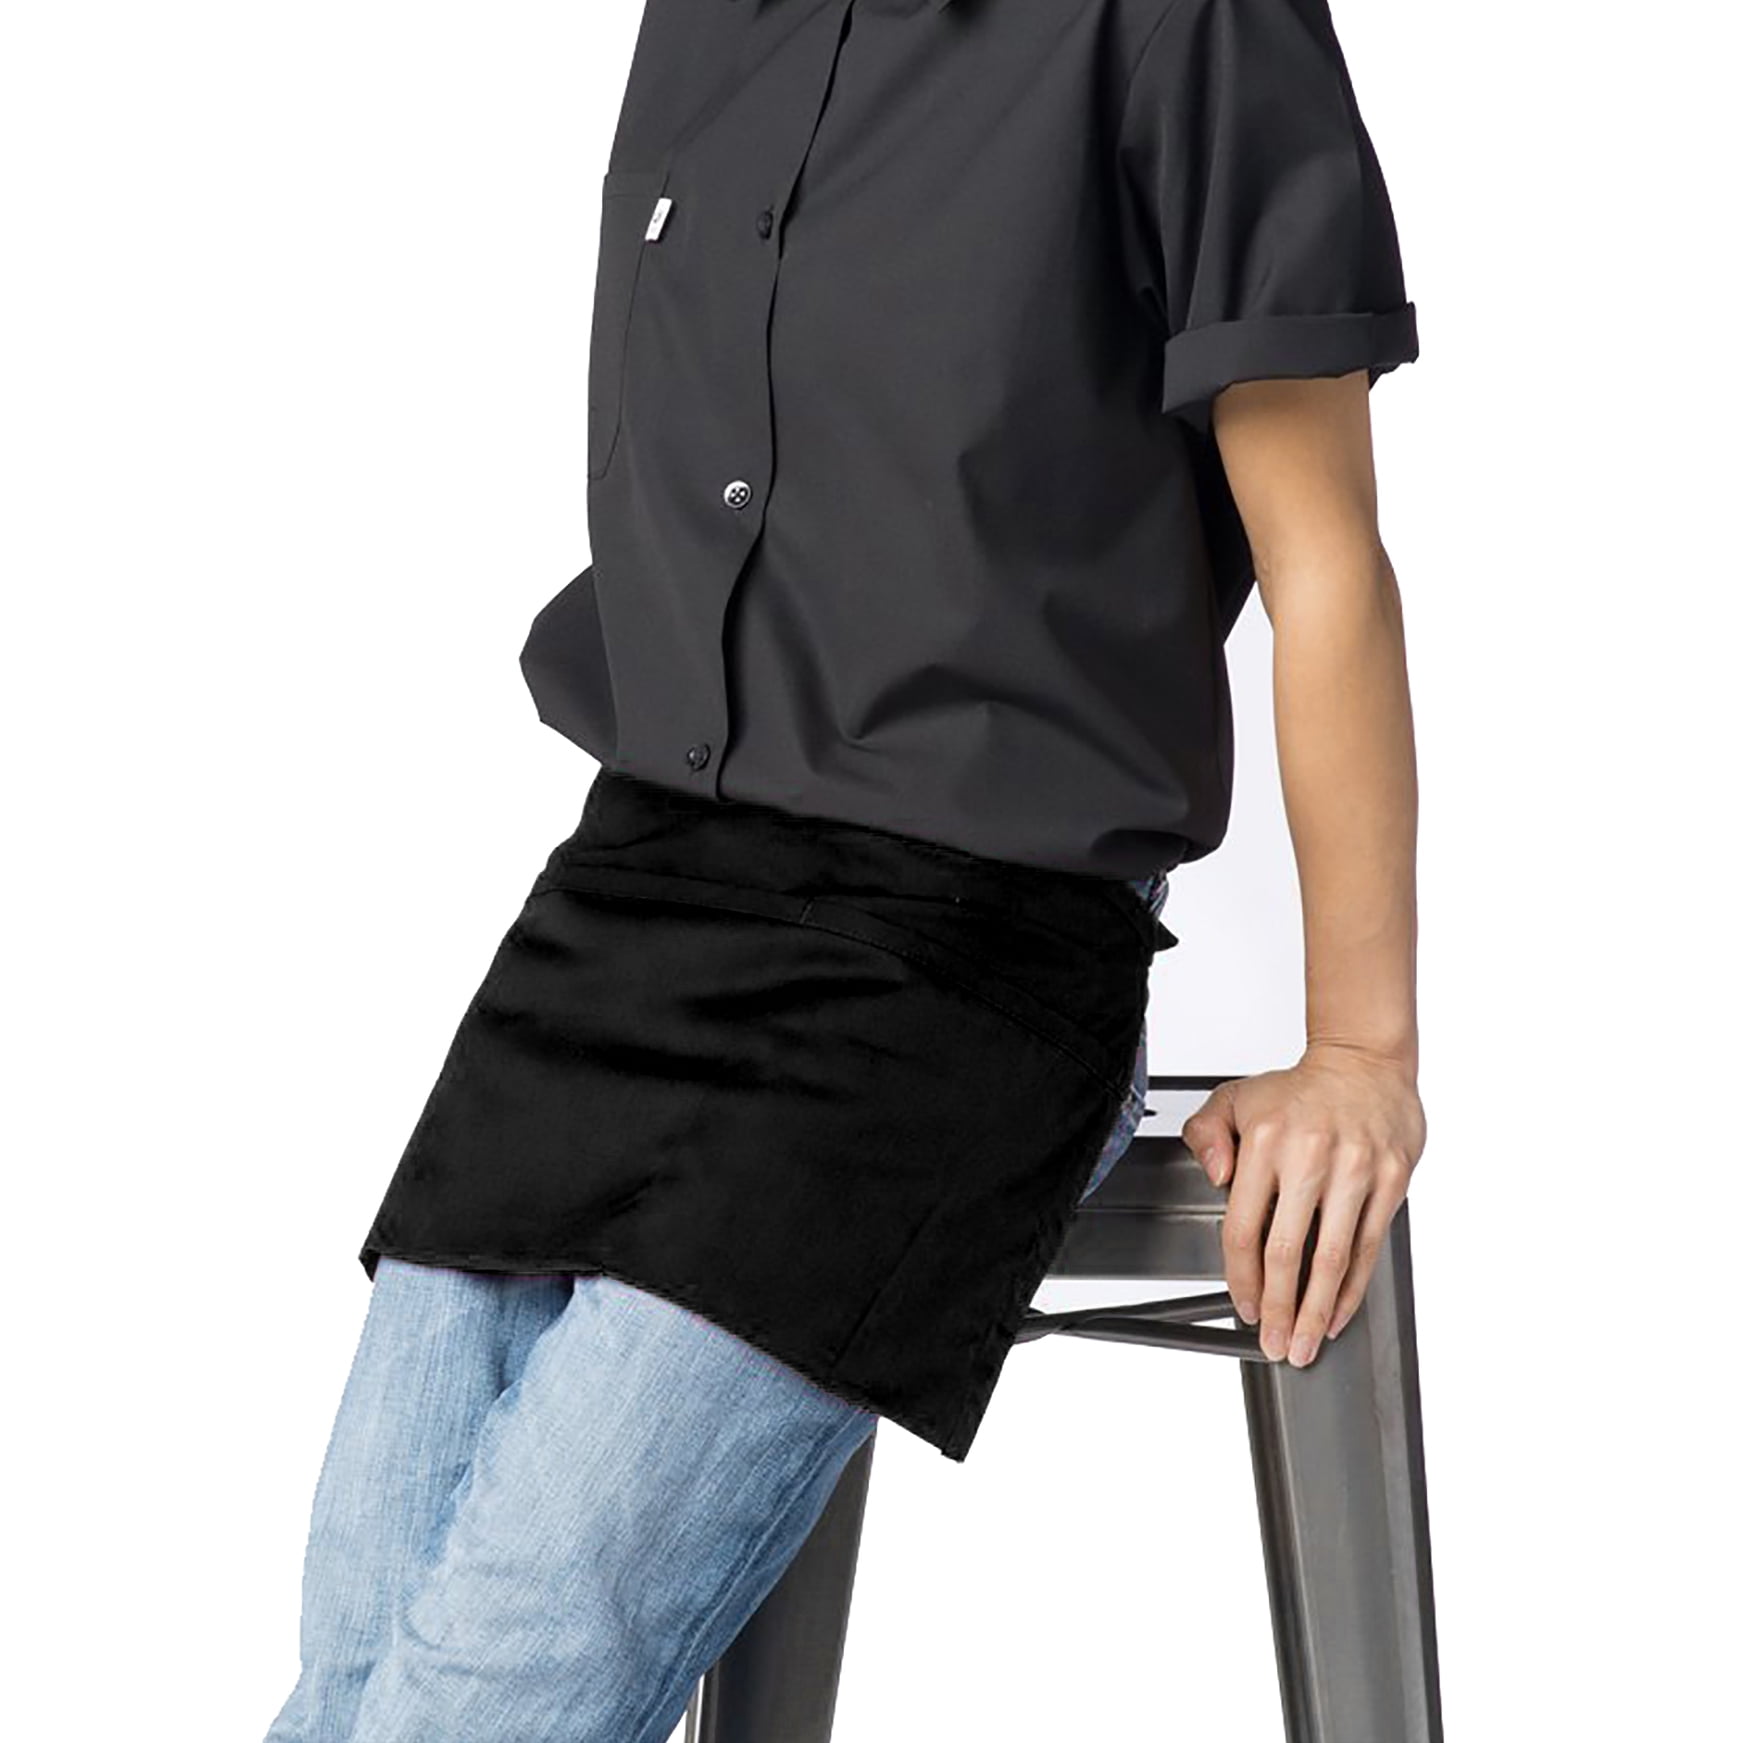 1 new black server apron 3 pocket half bistro waist waiter waitress restaurant 